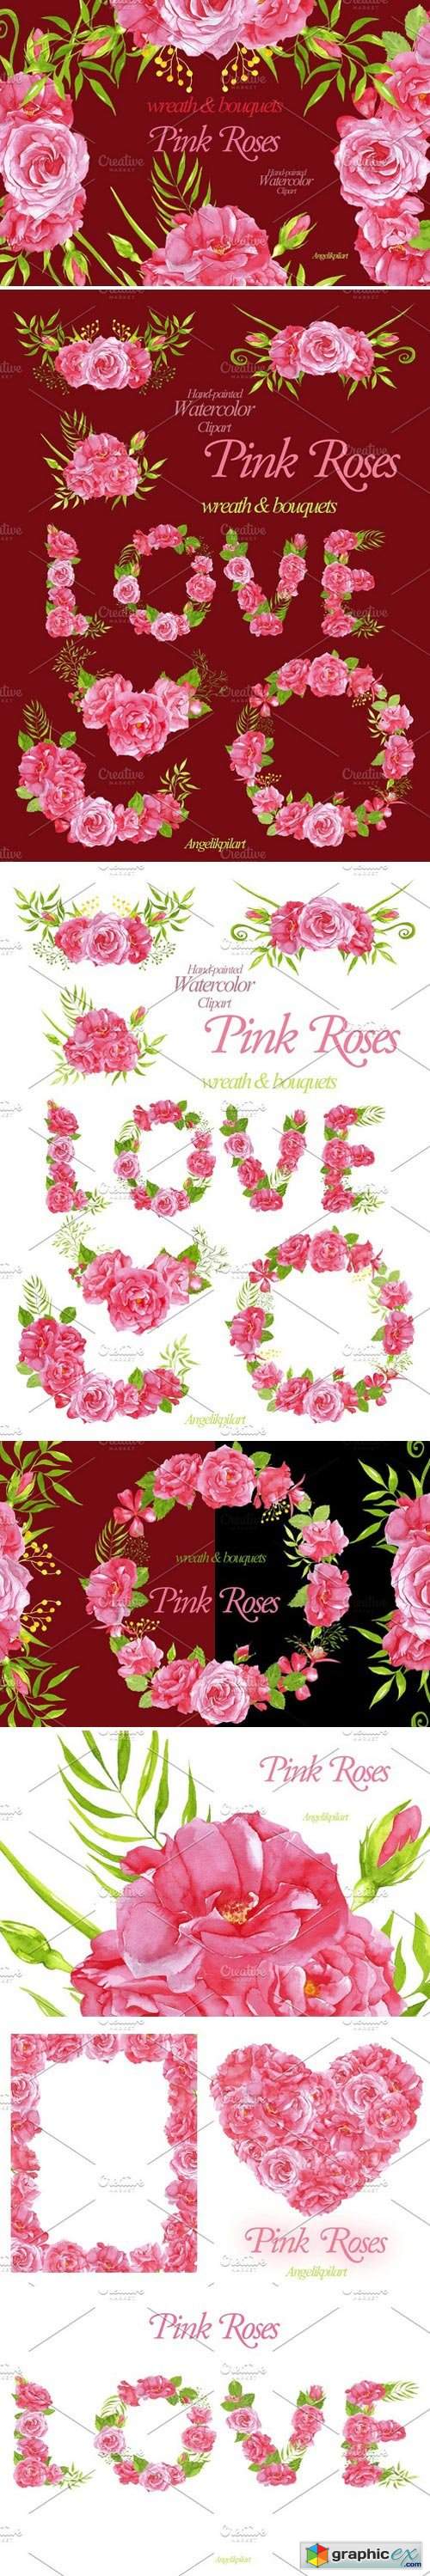 Watercolor PinkRoses wreath&bouquets